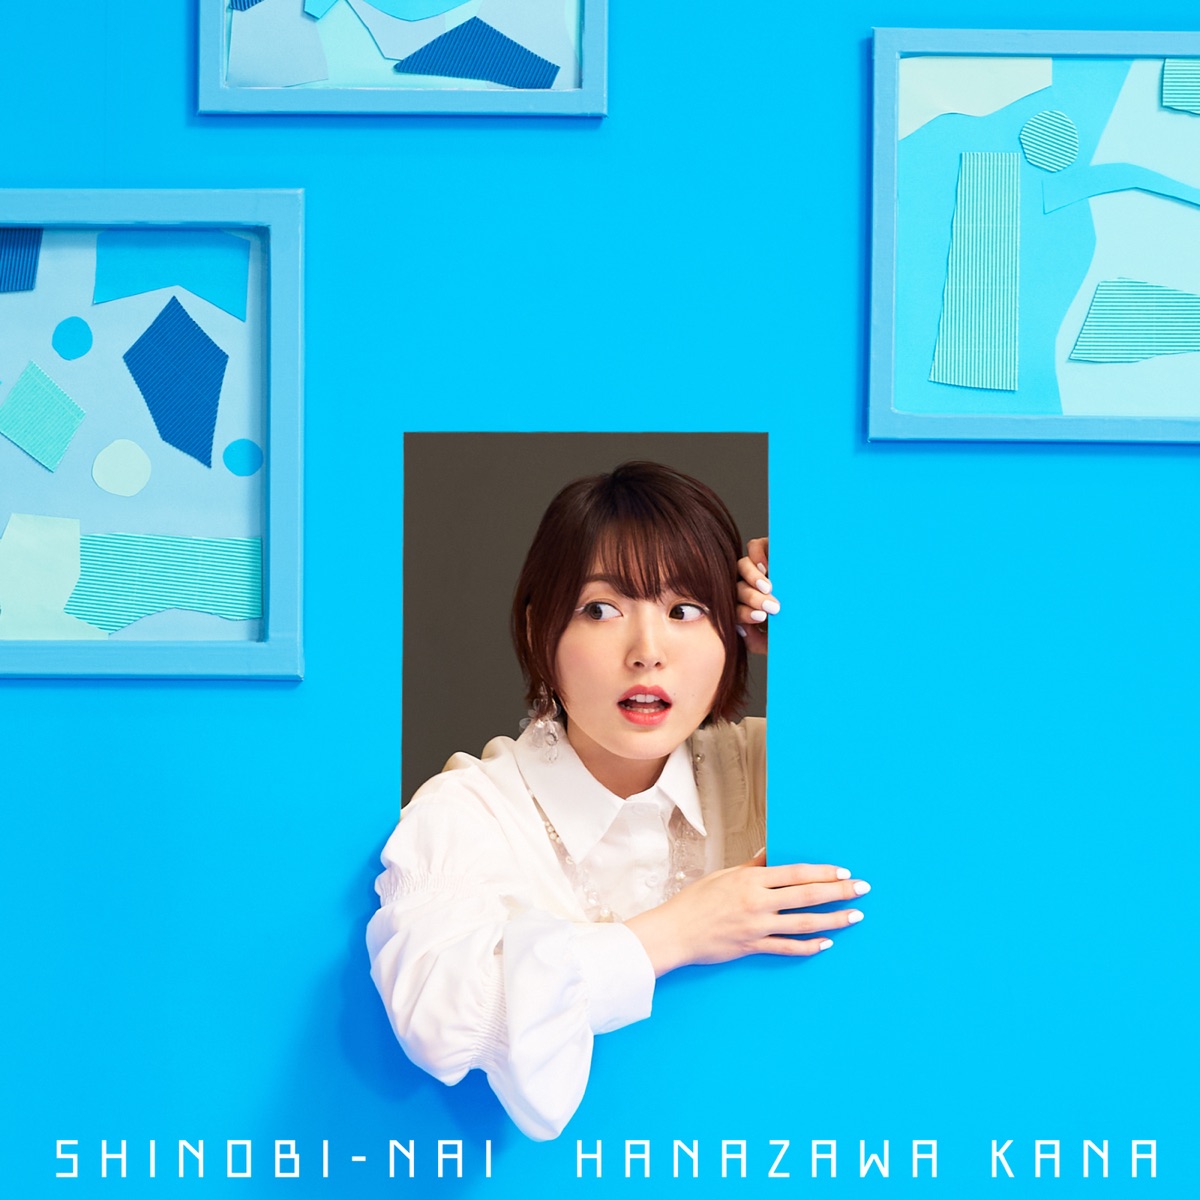 Cover for『Kana Hanazawa - SHINOBI-NAI』from the release『SHINOBI-NAI』